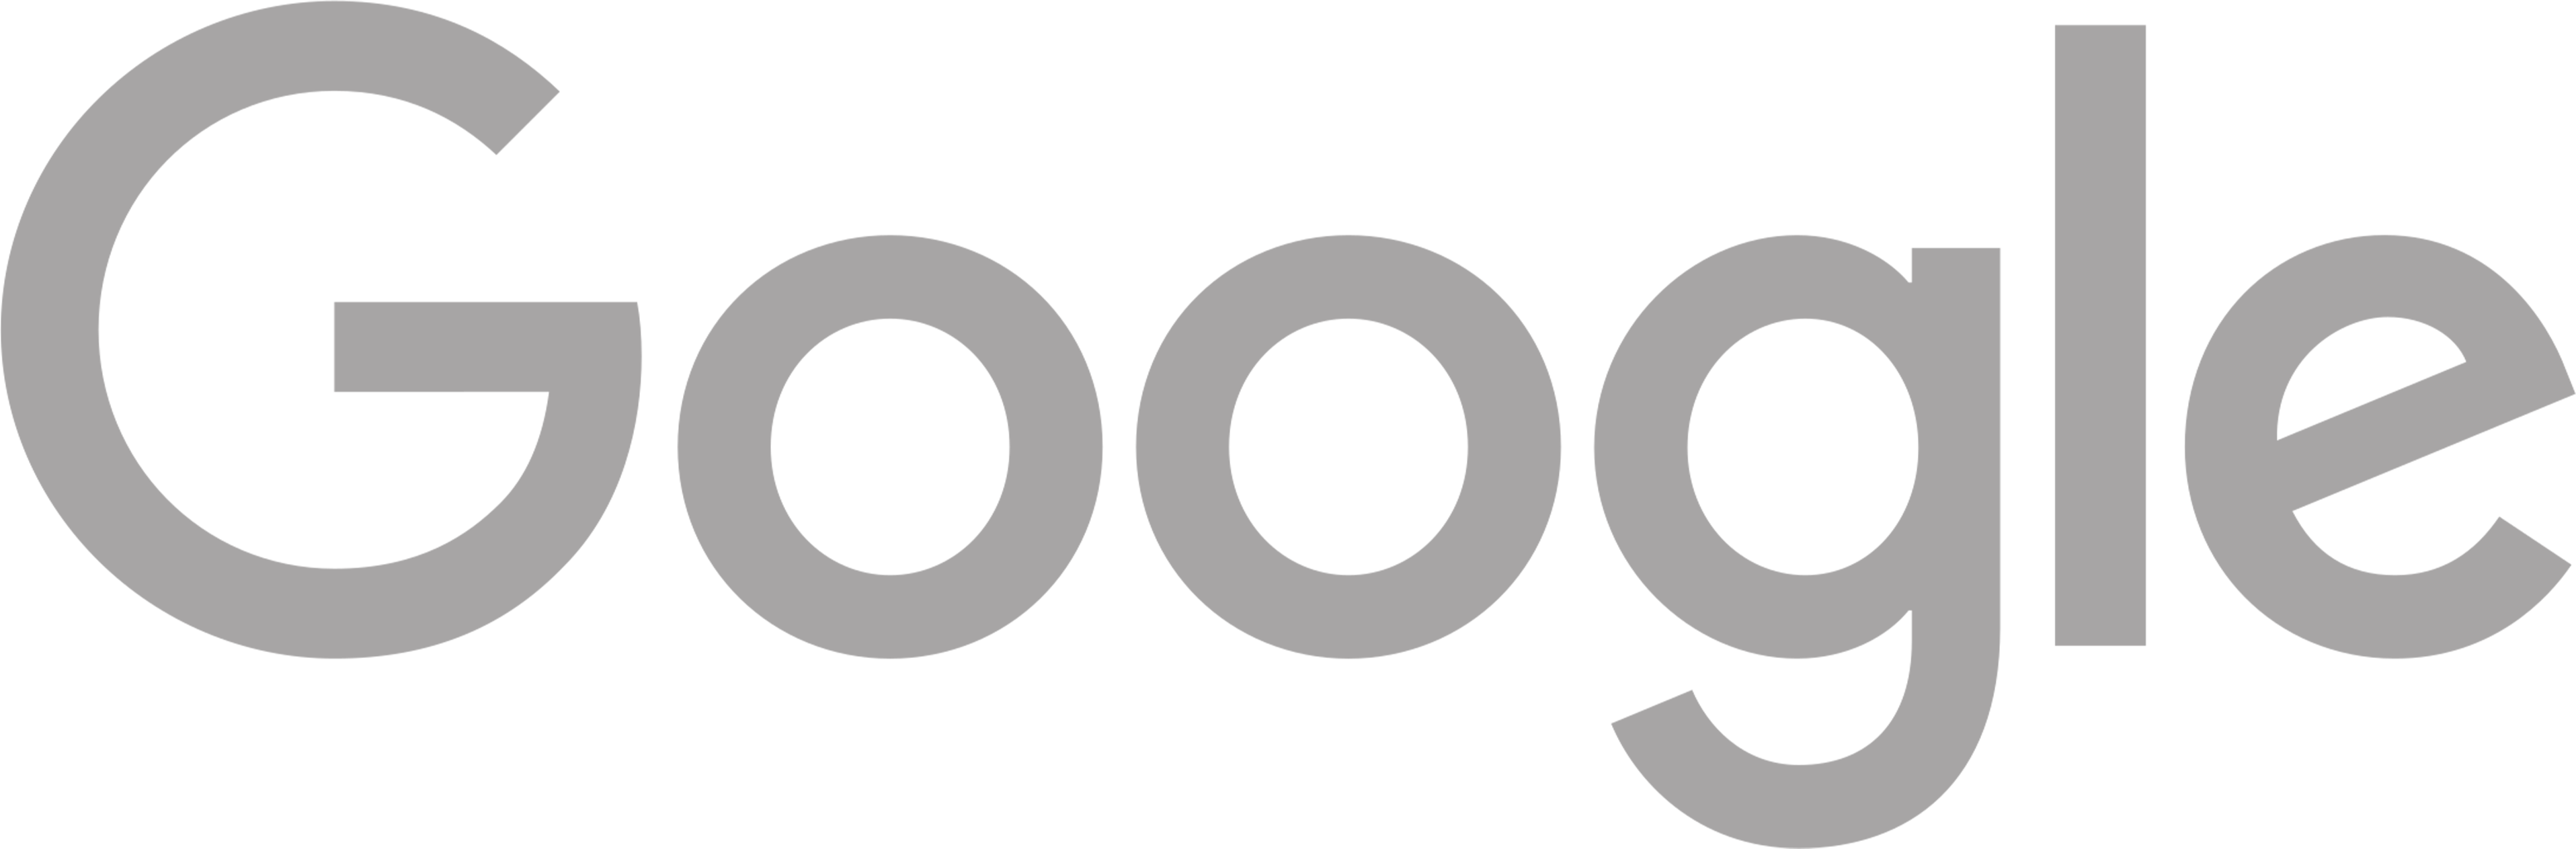 google-logo-black-transparent